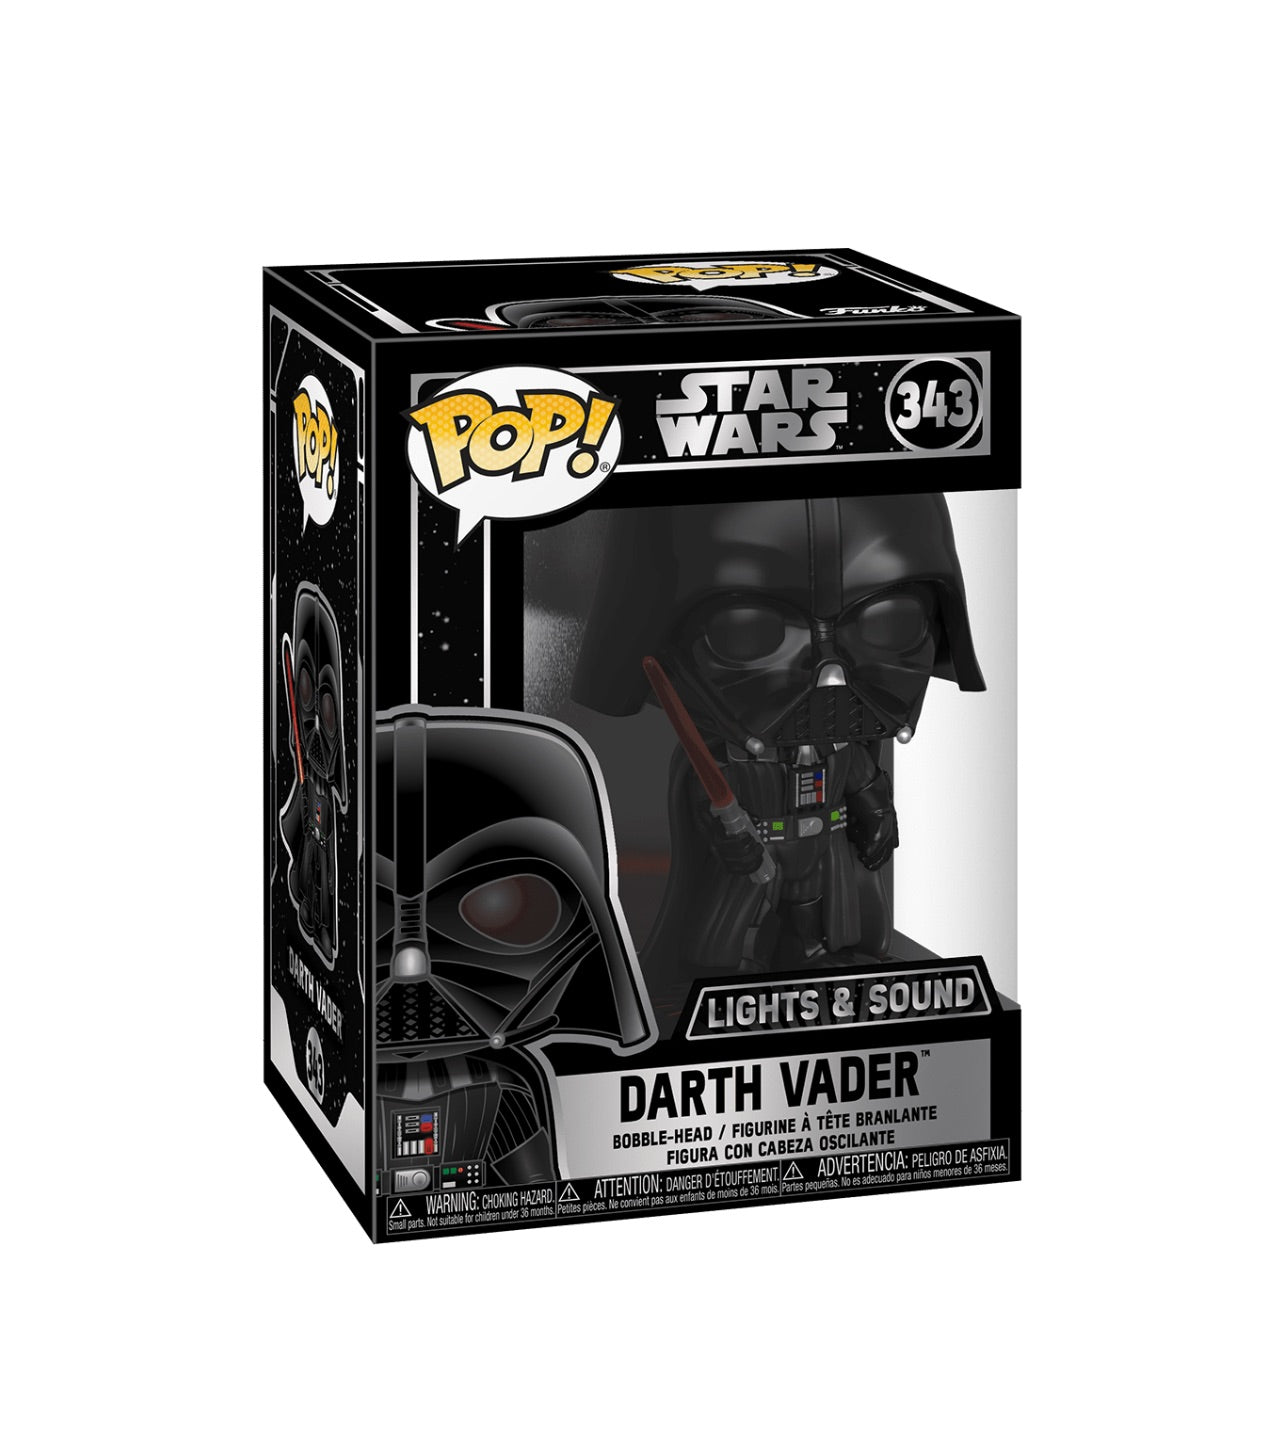 POP! Star Wars Lights & Sound Darth Vader #343